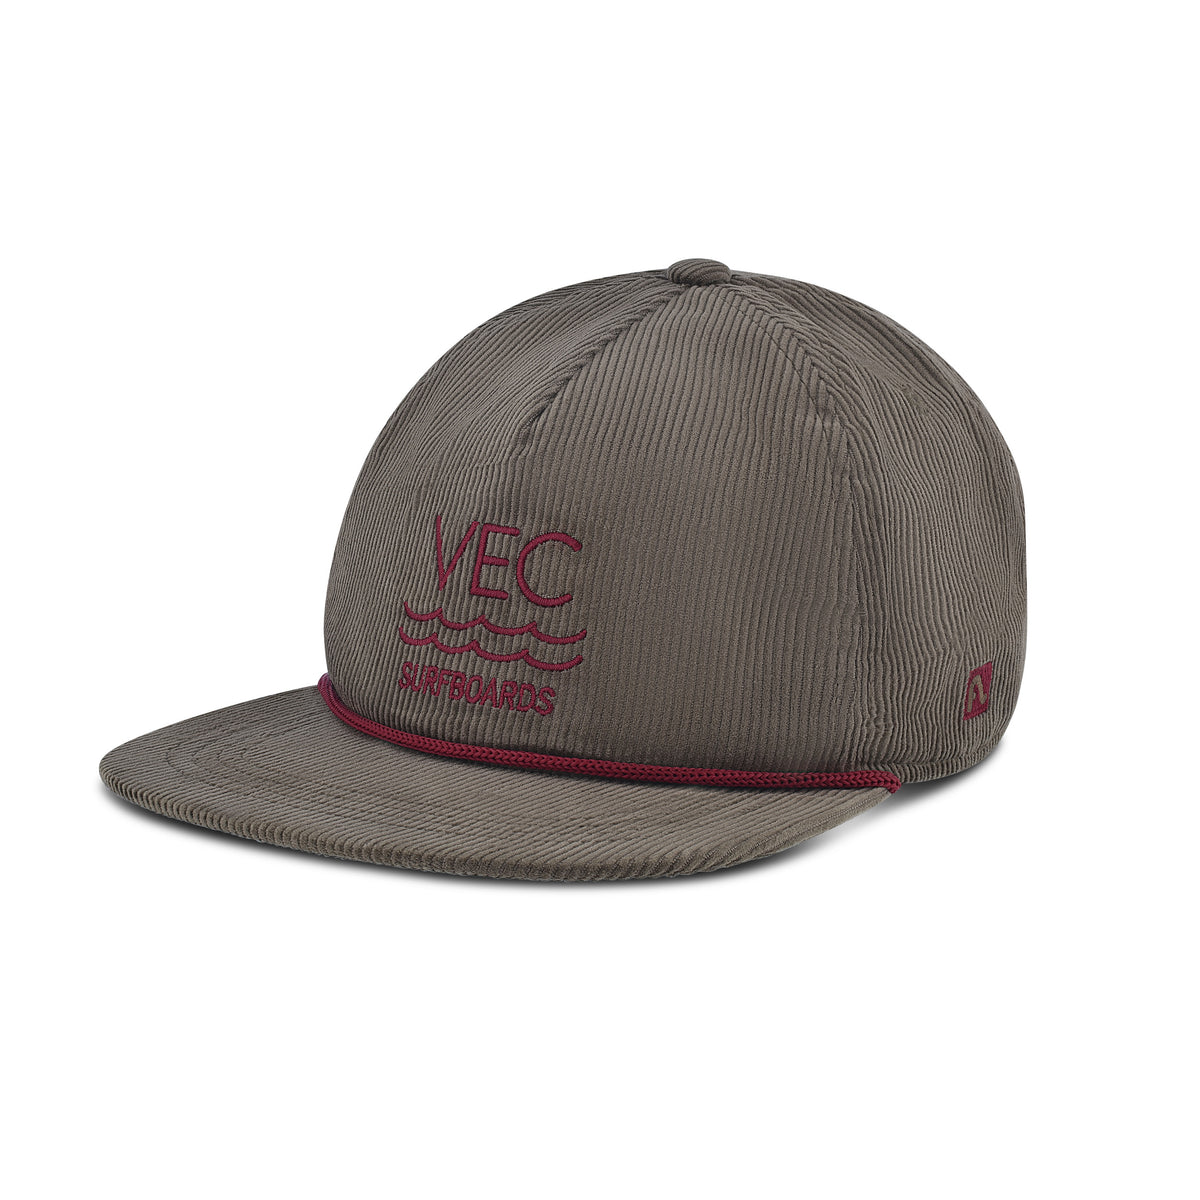 VEC Surfboards Cord Hat